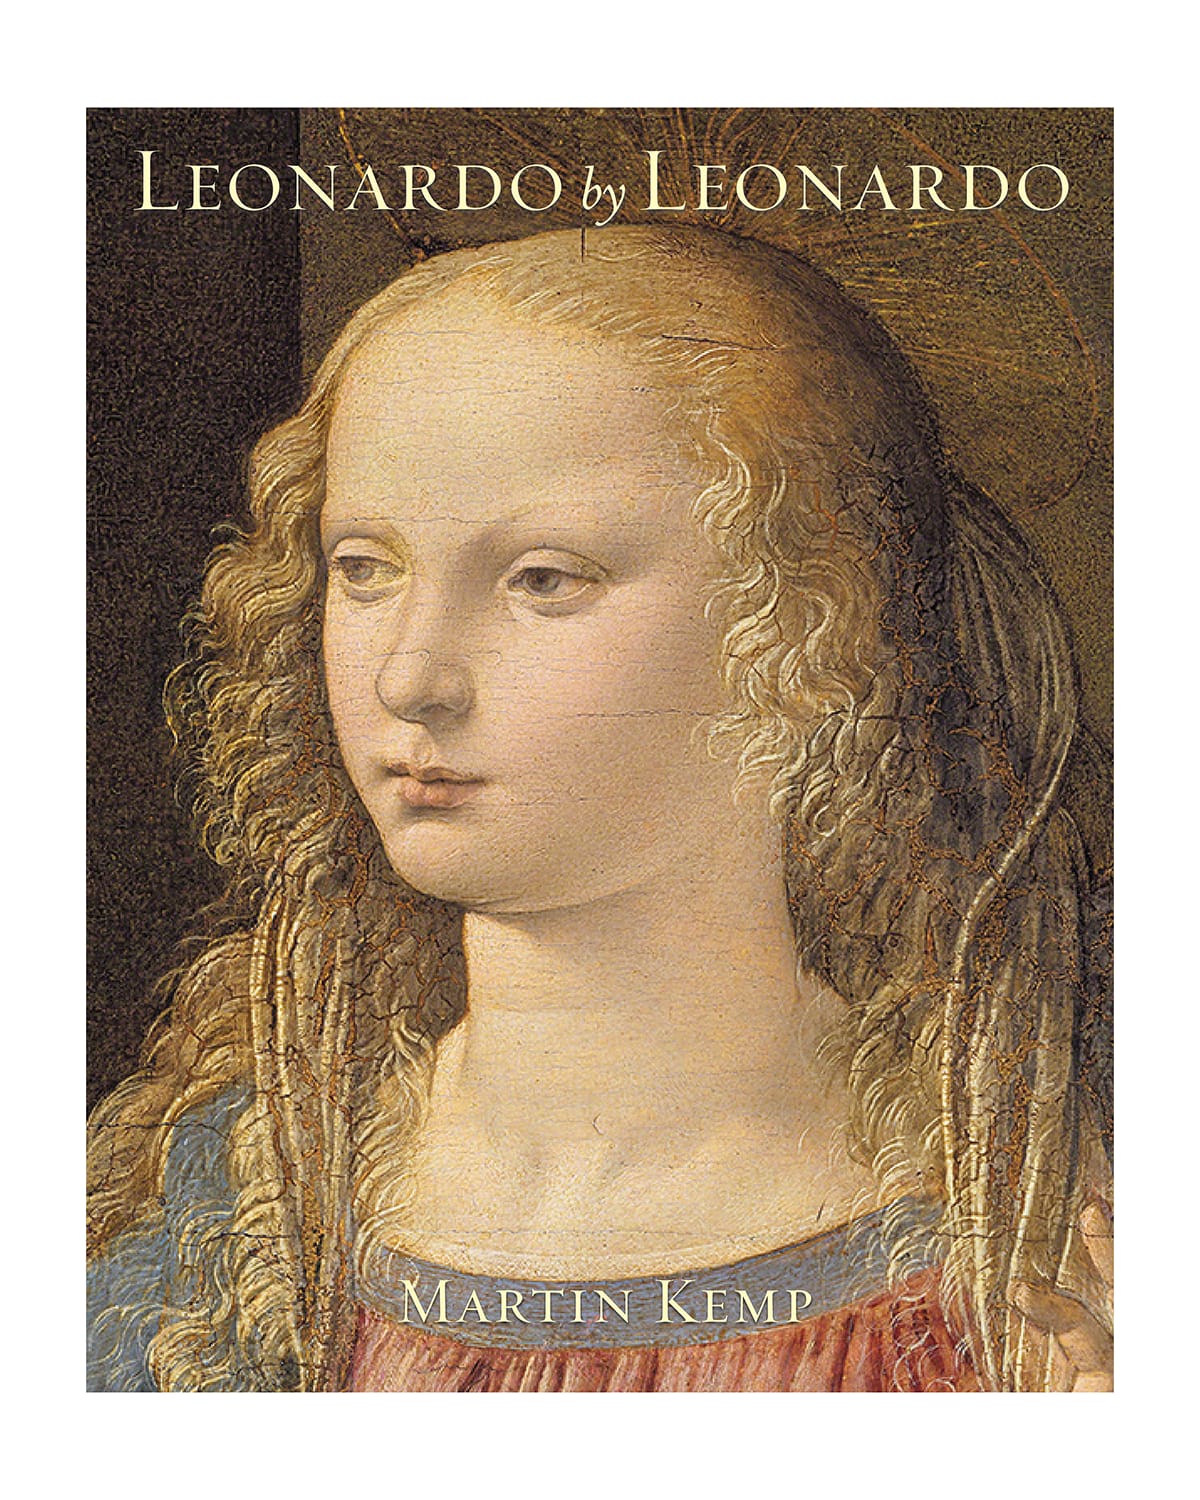 Leonardo by Leonardo by Martin J. Kemp